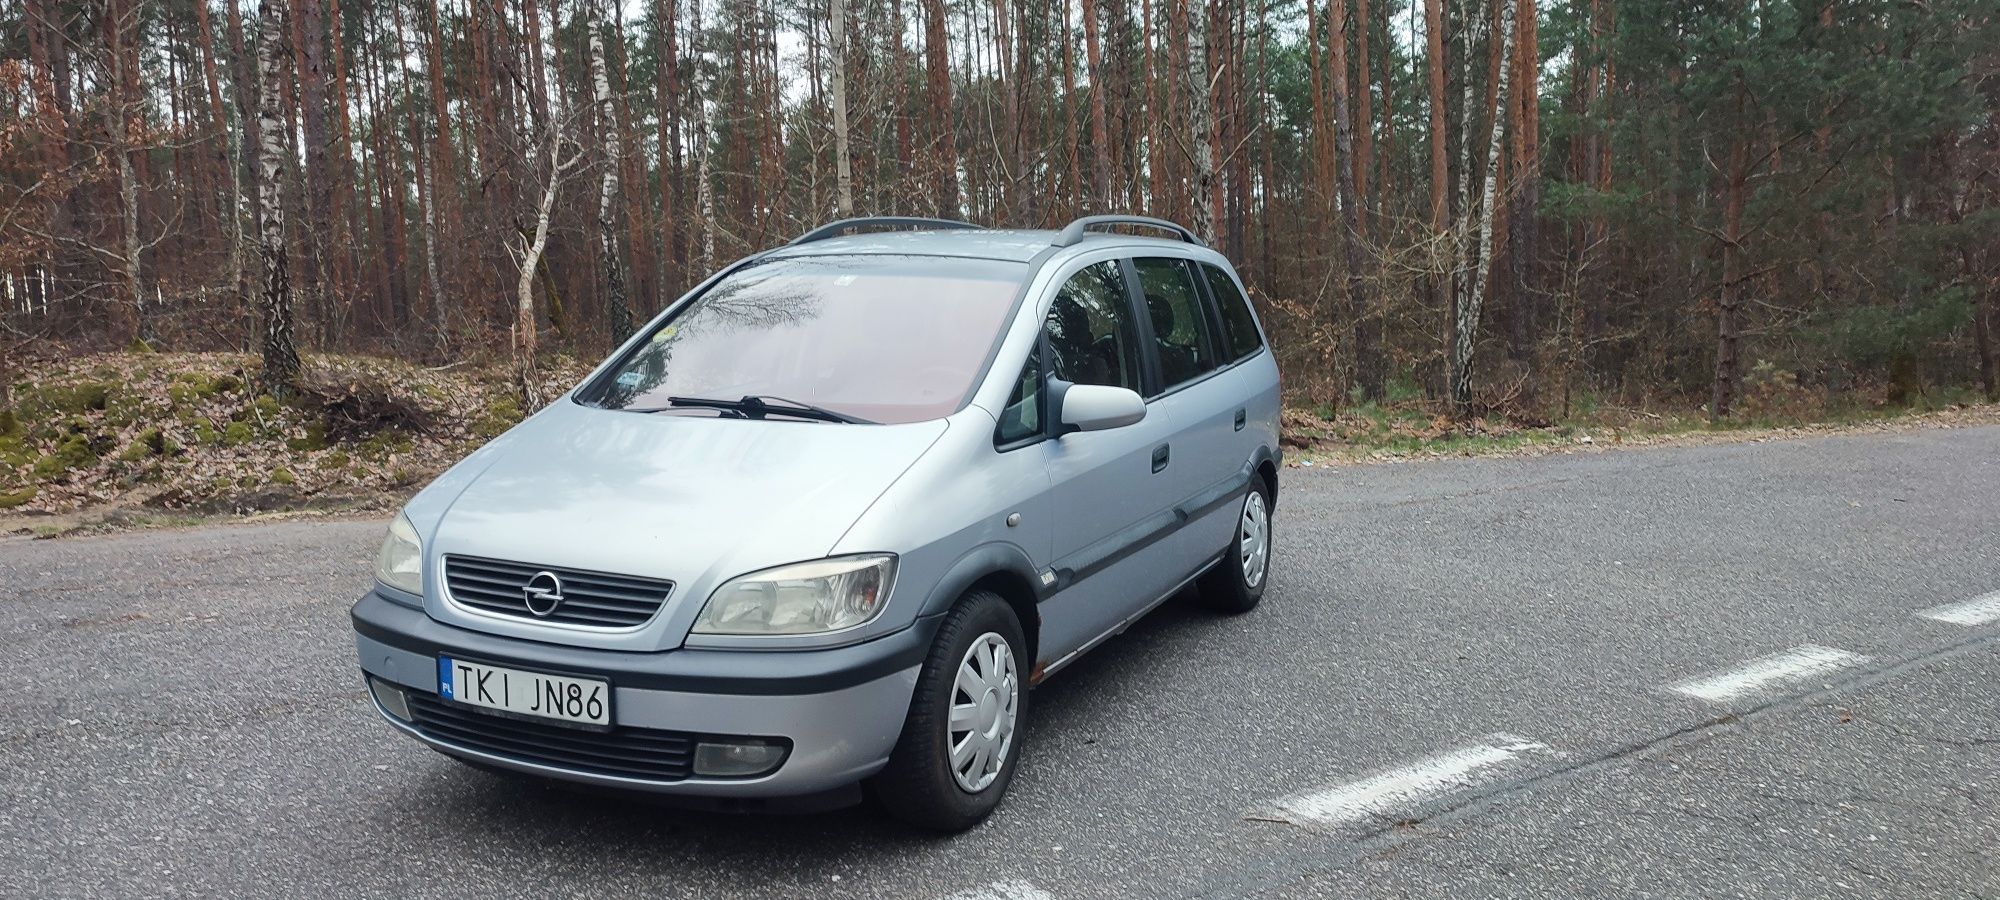 Opel Zafira 2.0 rok 2001